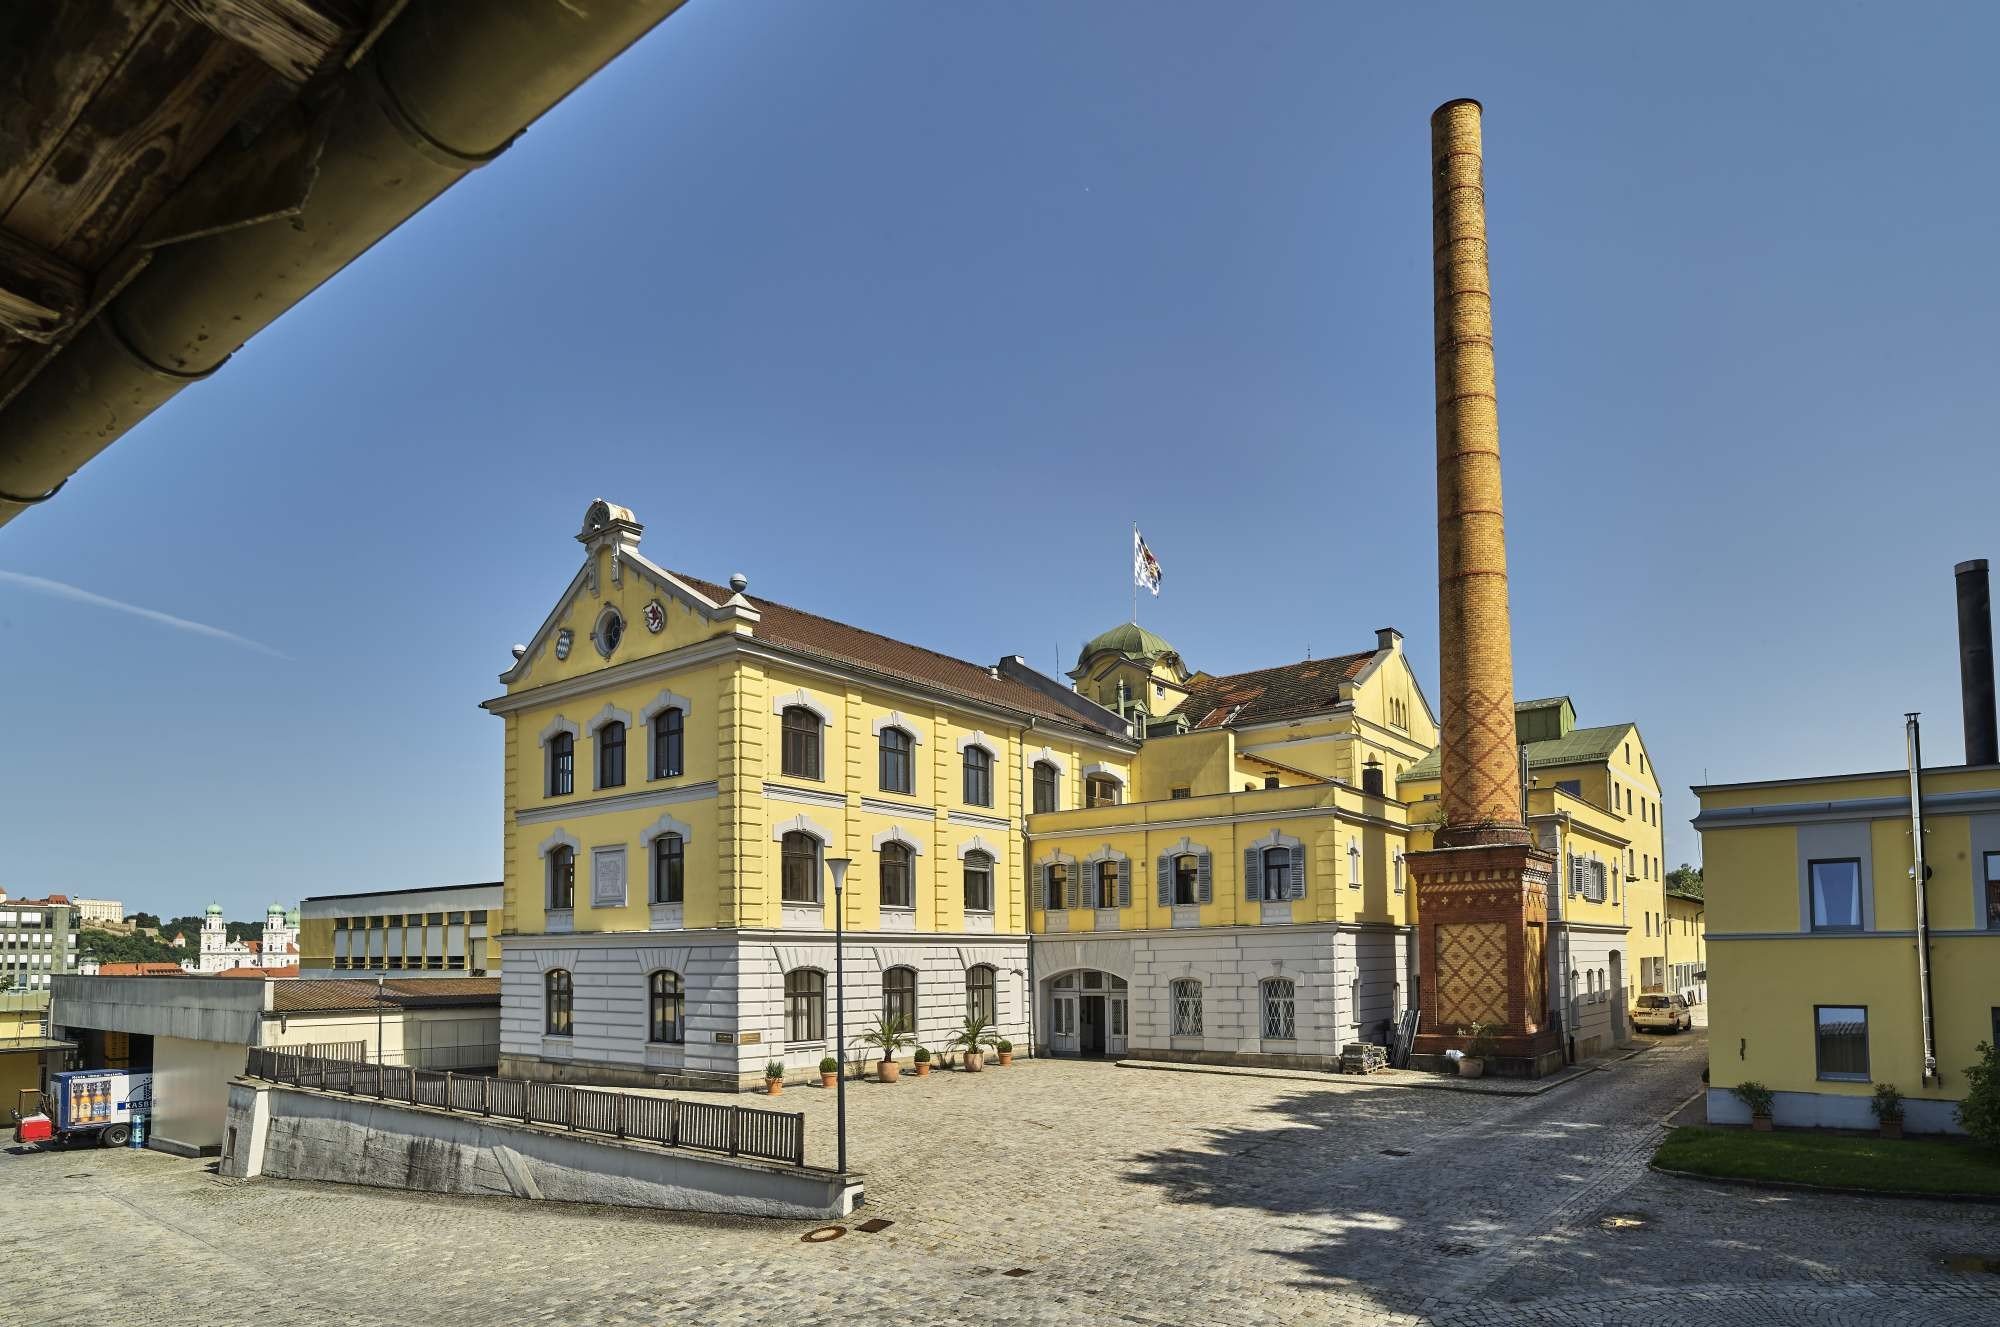 Löwenbrauerei Passau brewery from Germany